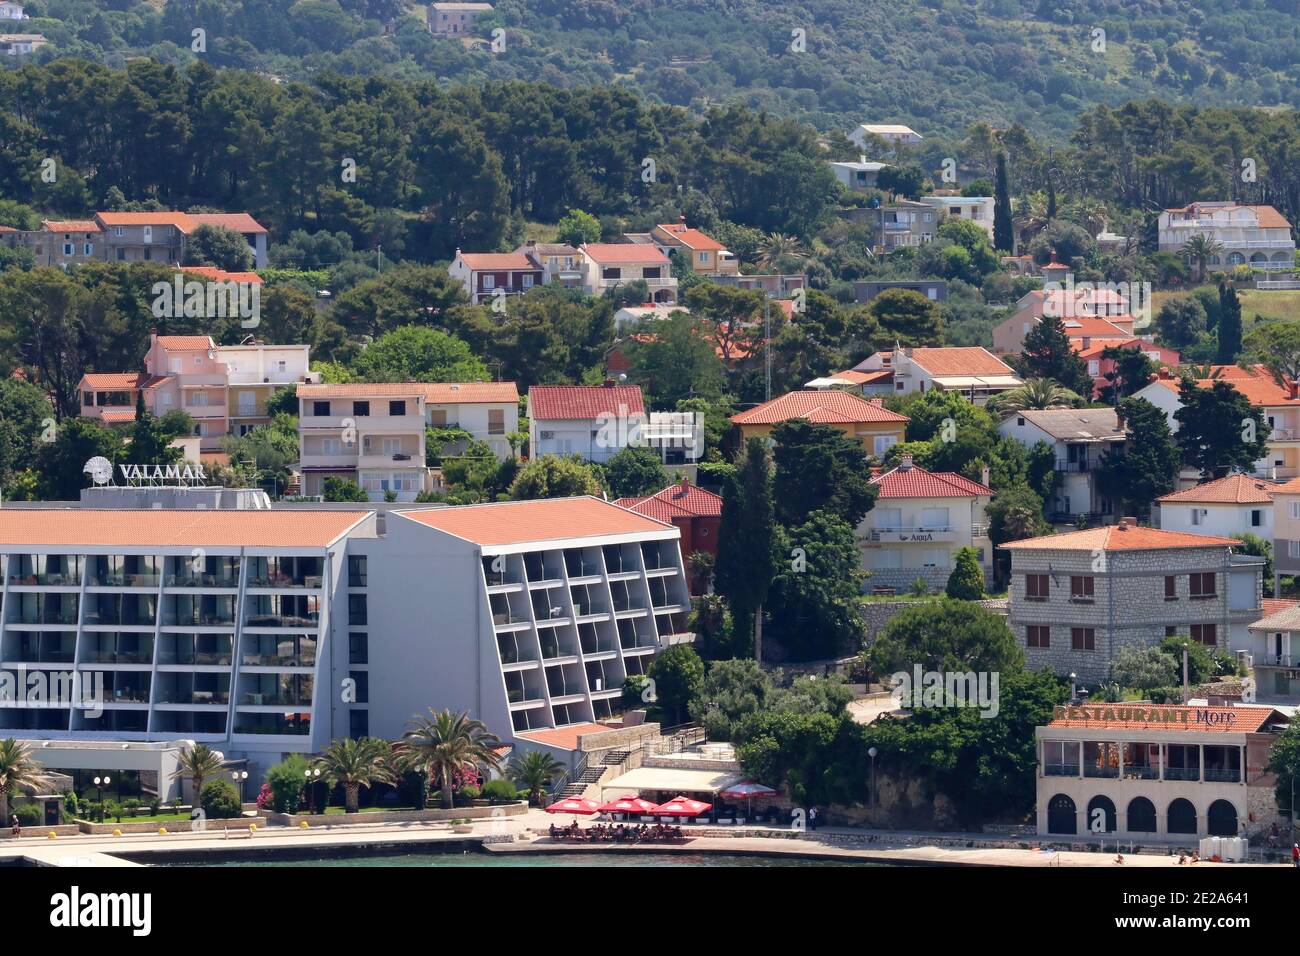 Kroatien, Kvarner Region, Insel Rab modernes Hotel am Strand mit Hügeln dahinter. Stockfoto